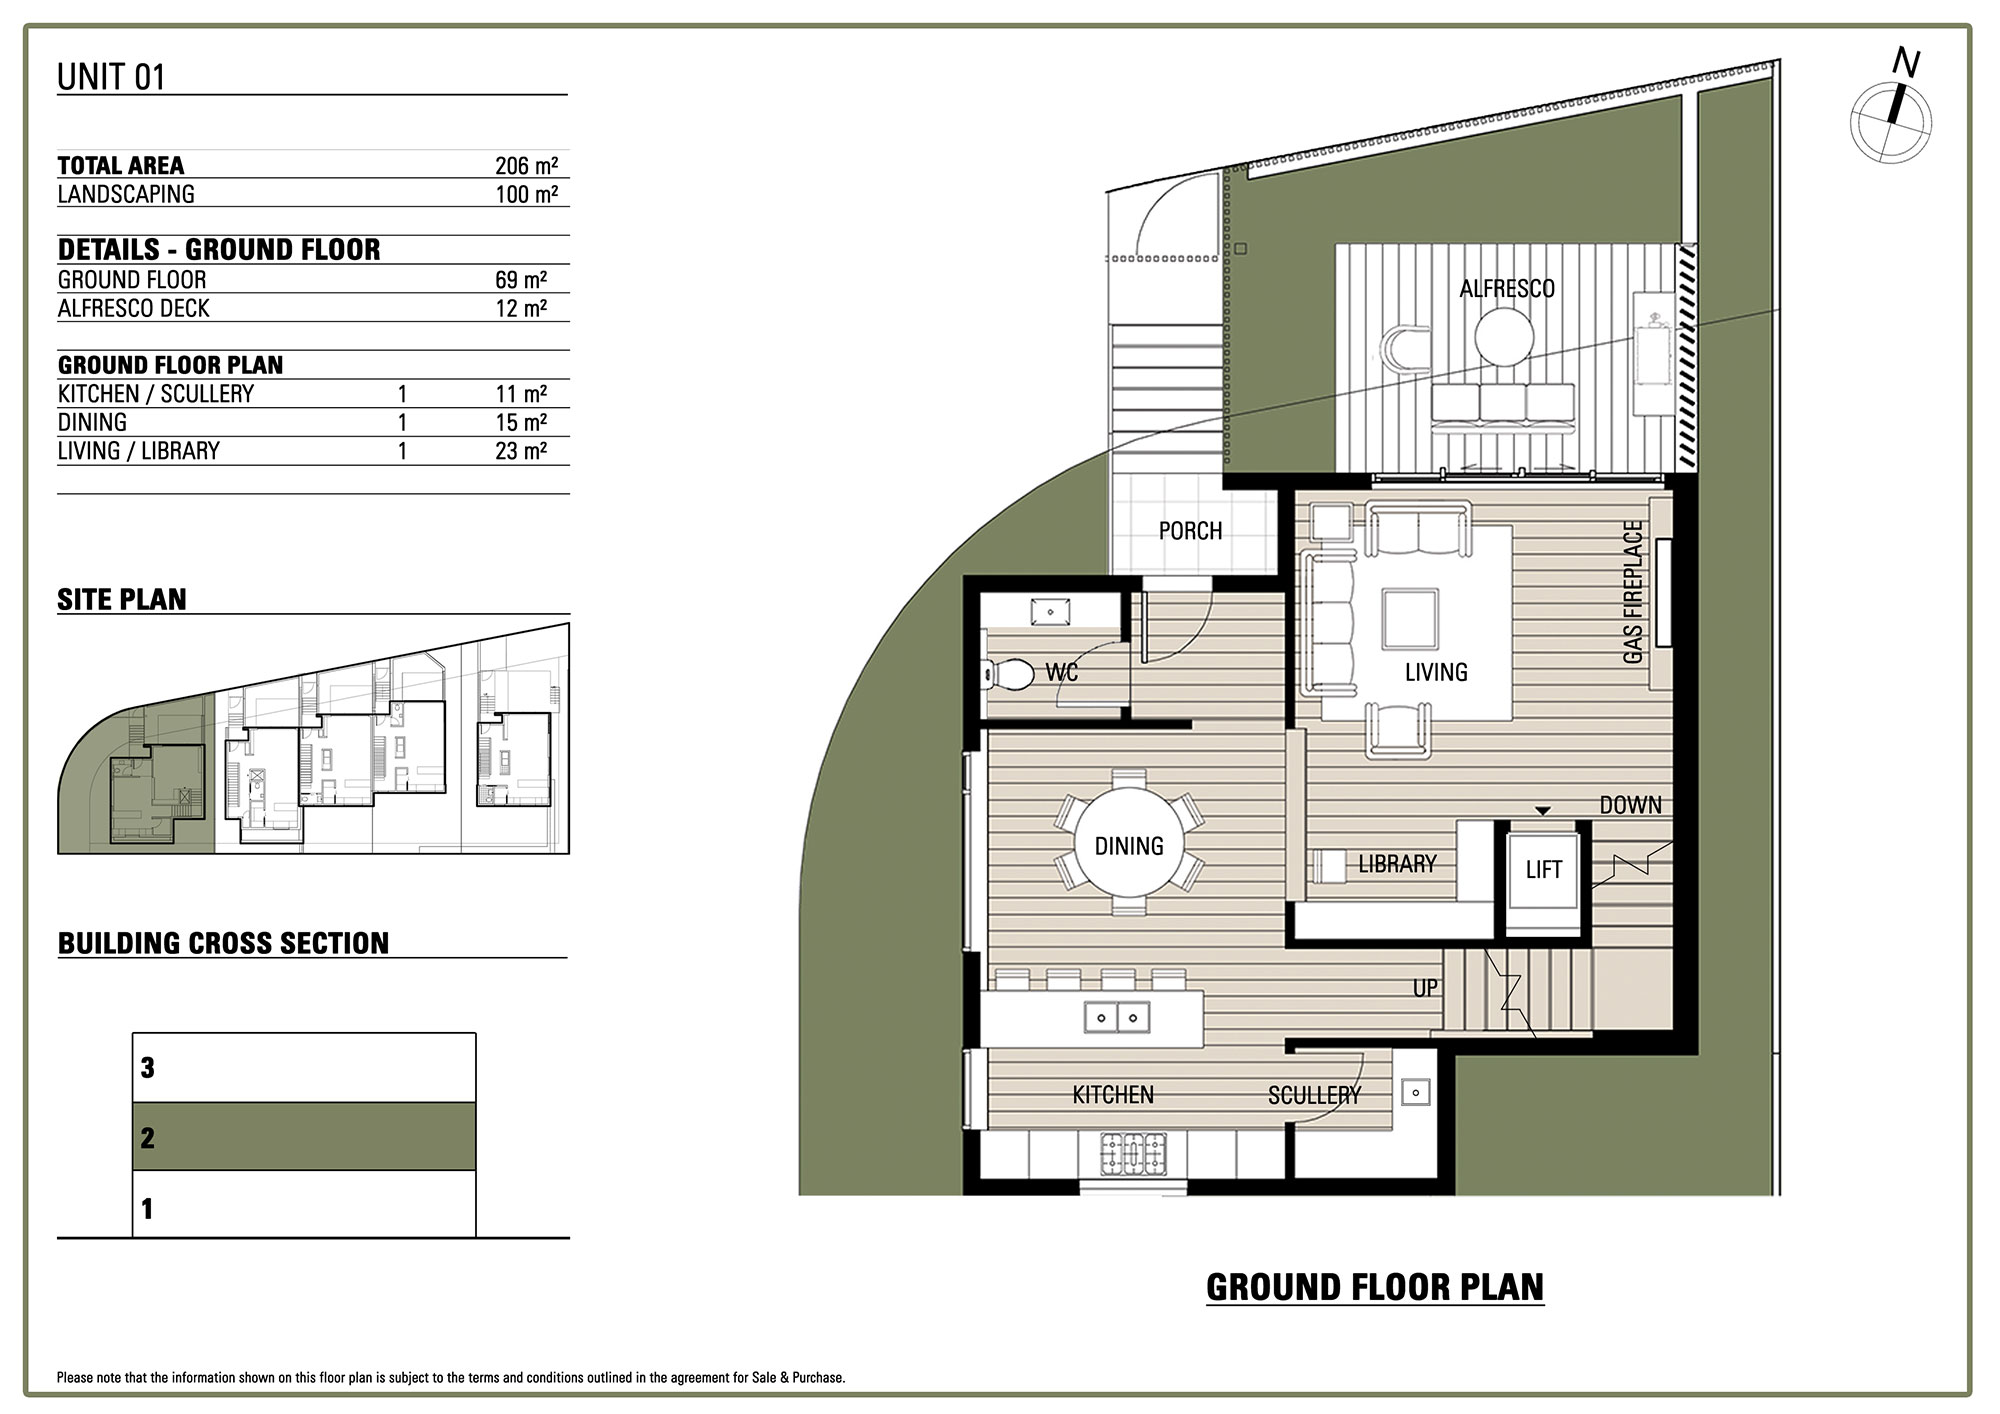 Floorplans 5716 1 & 1a Siota Cres, Kohimarama Plans.jpg Unit 01 Gf